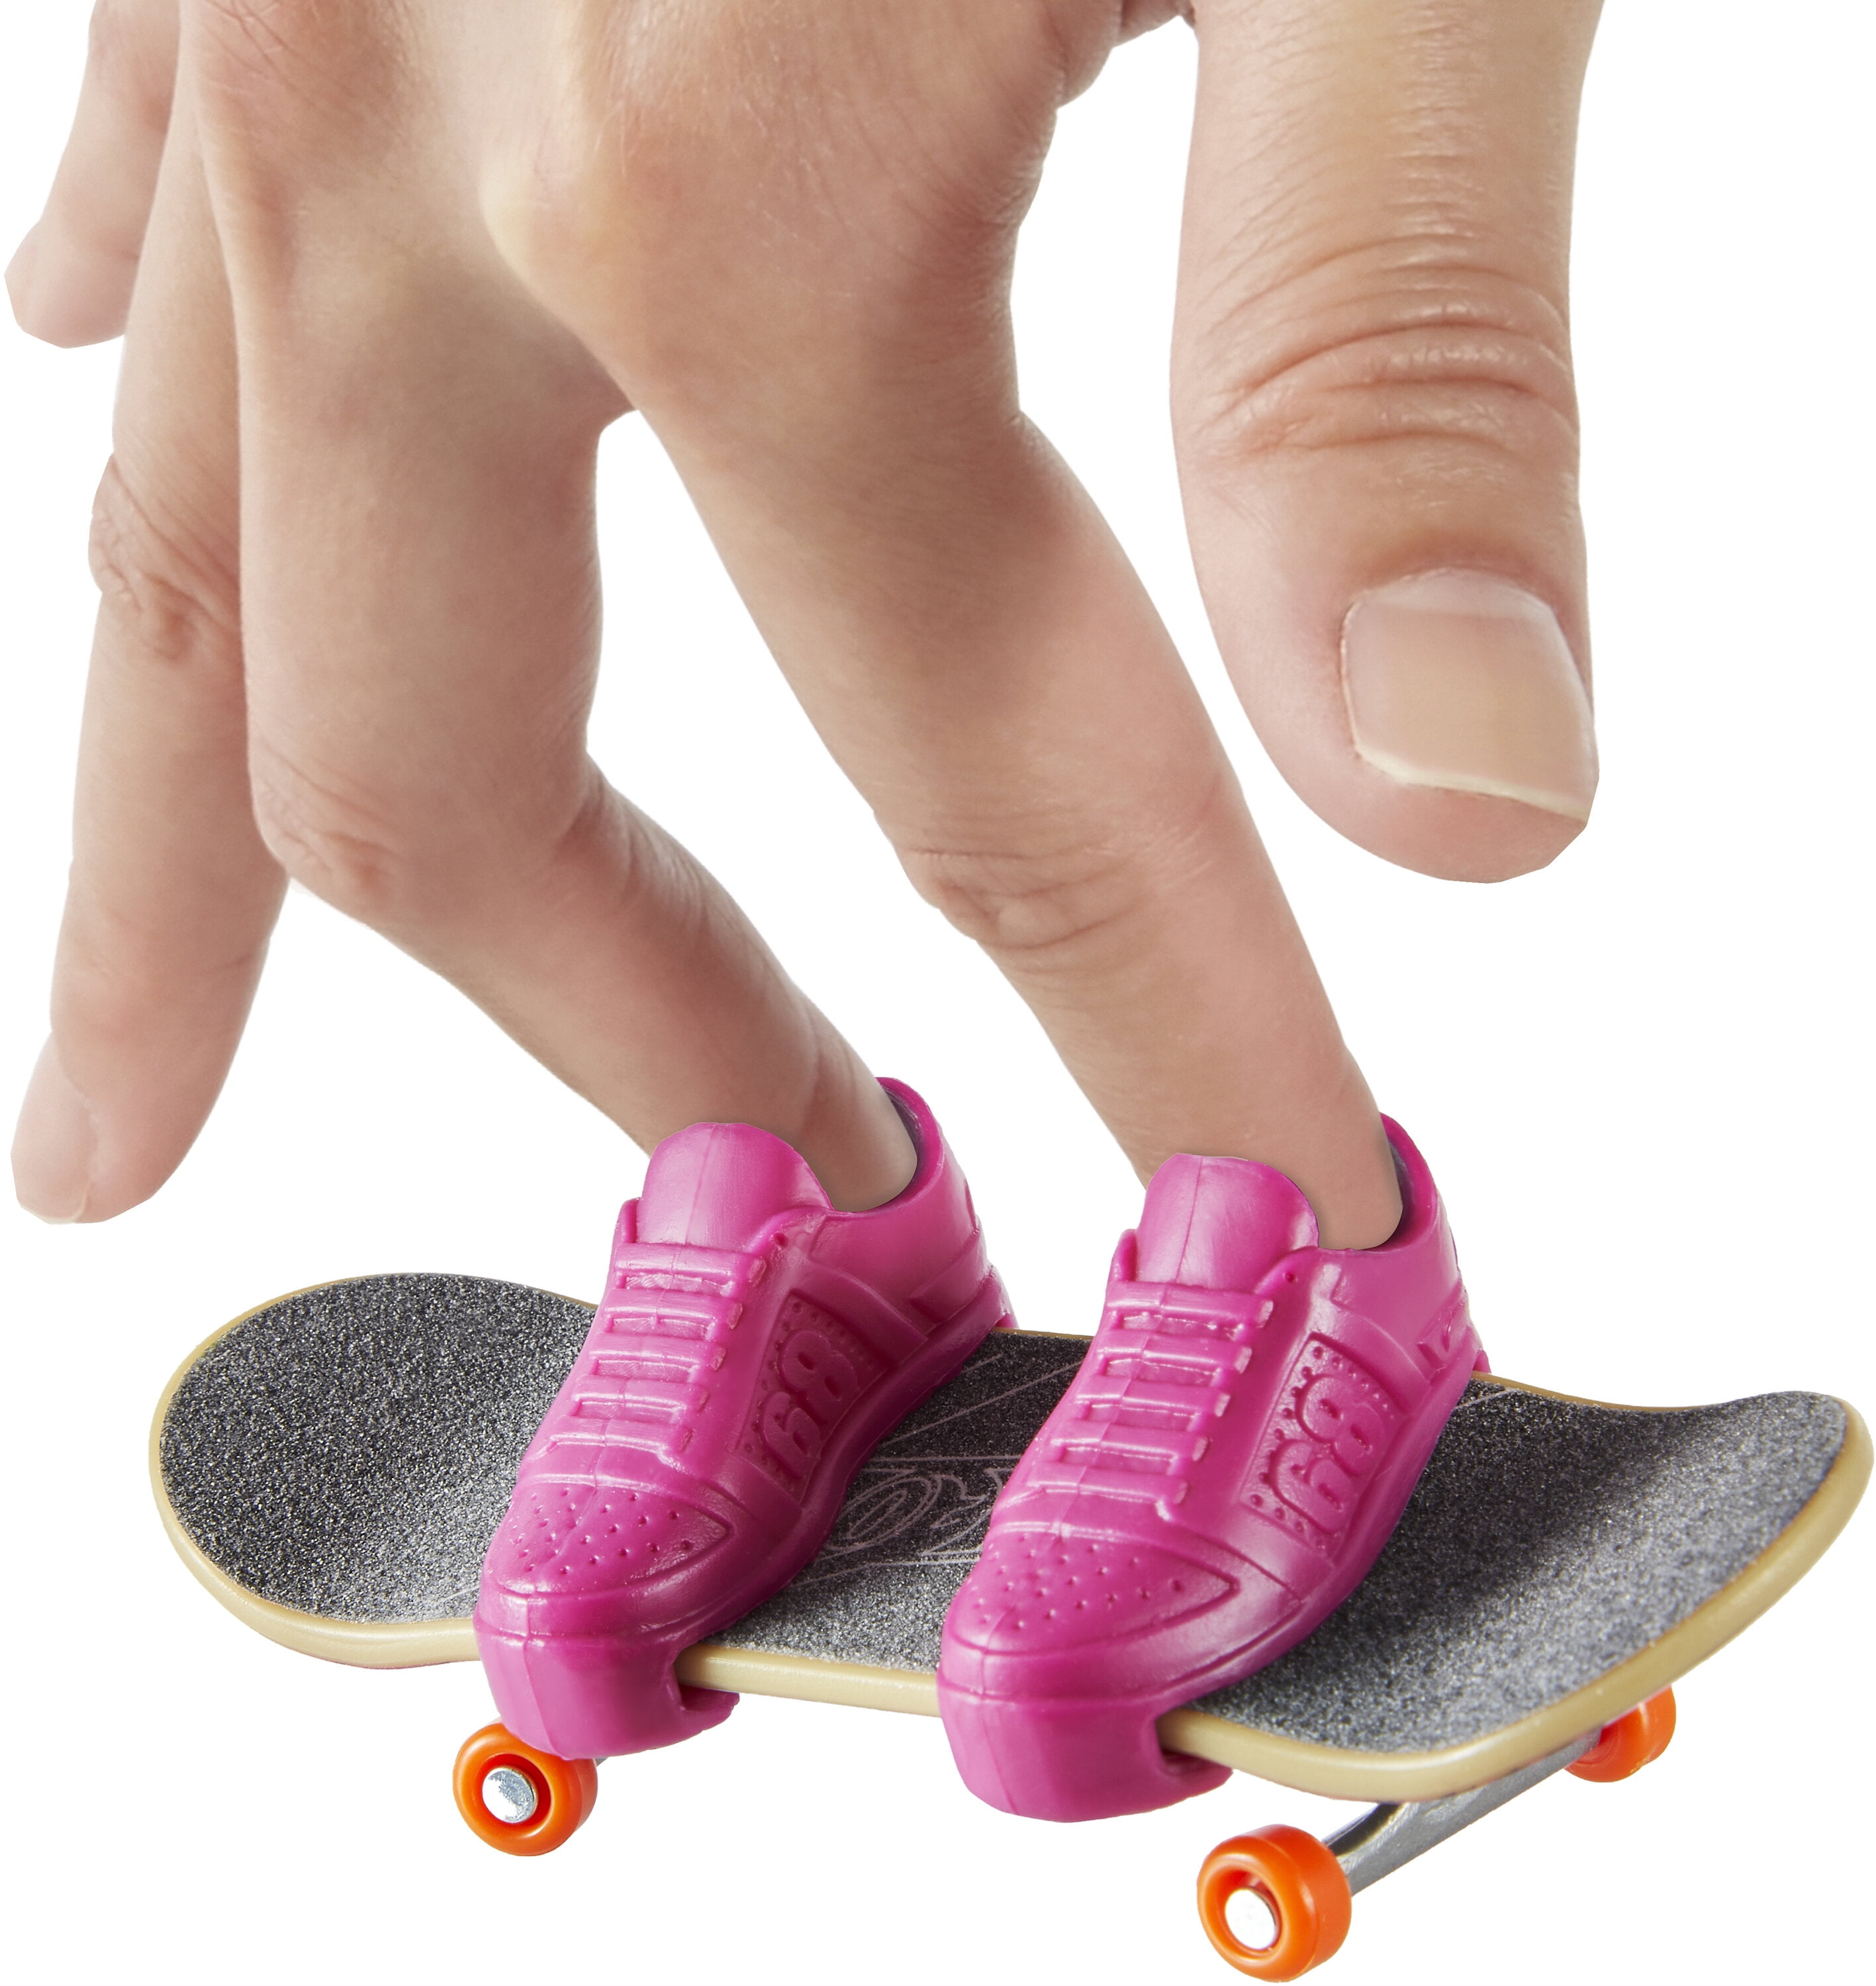 Hot Wheels Skate Fingerboard Tony Hawk Grip & Grind HNG39